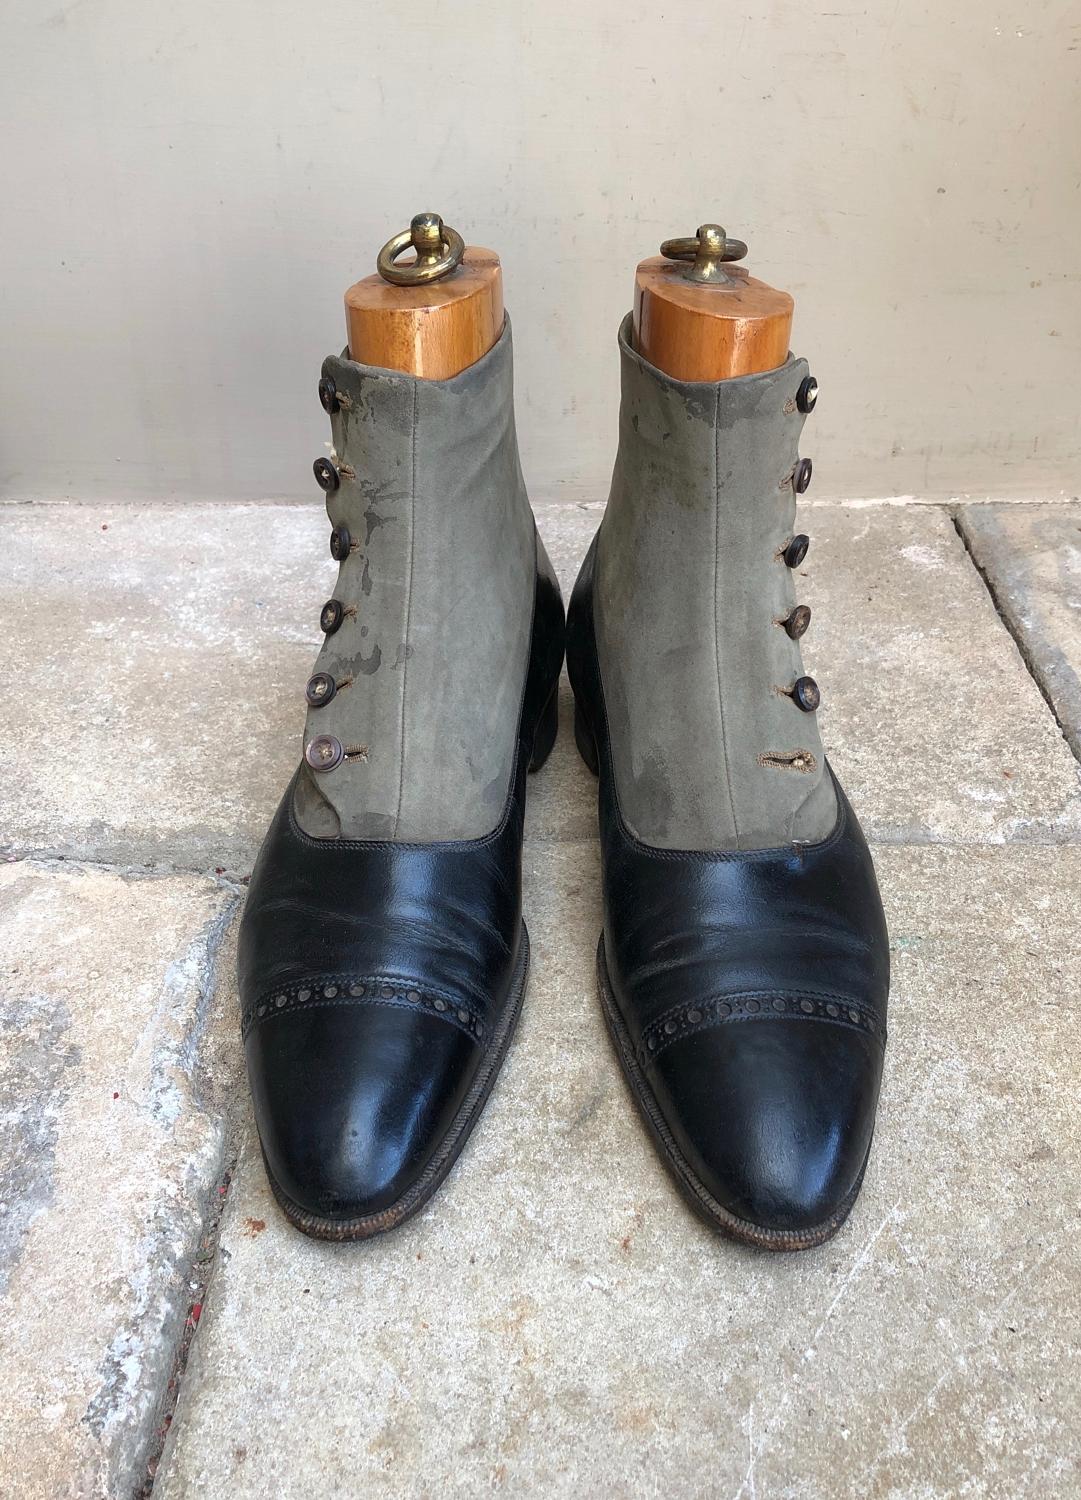 Edwardian Leather Shoes with Original Shoe Trees